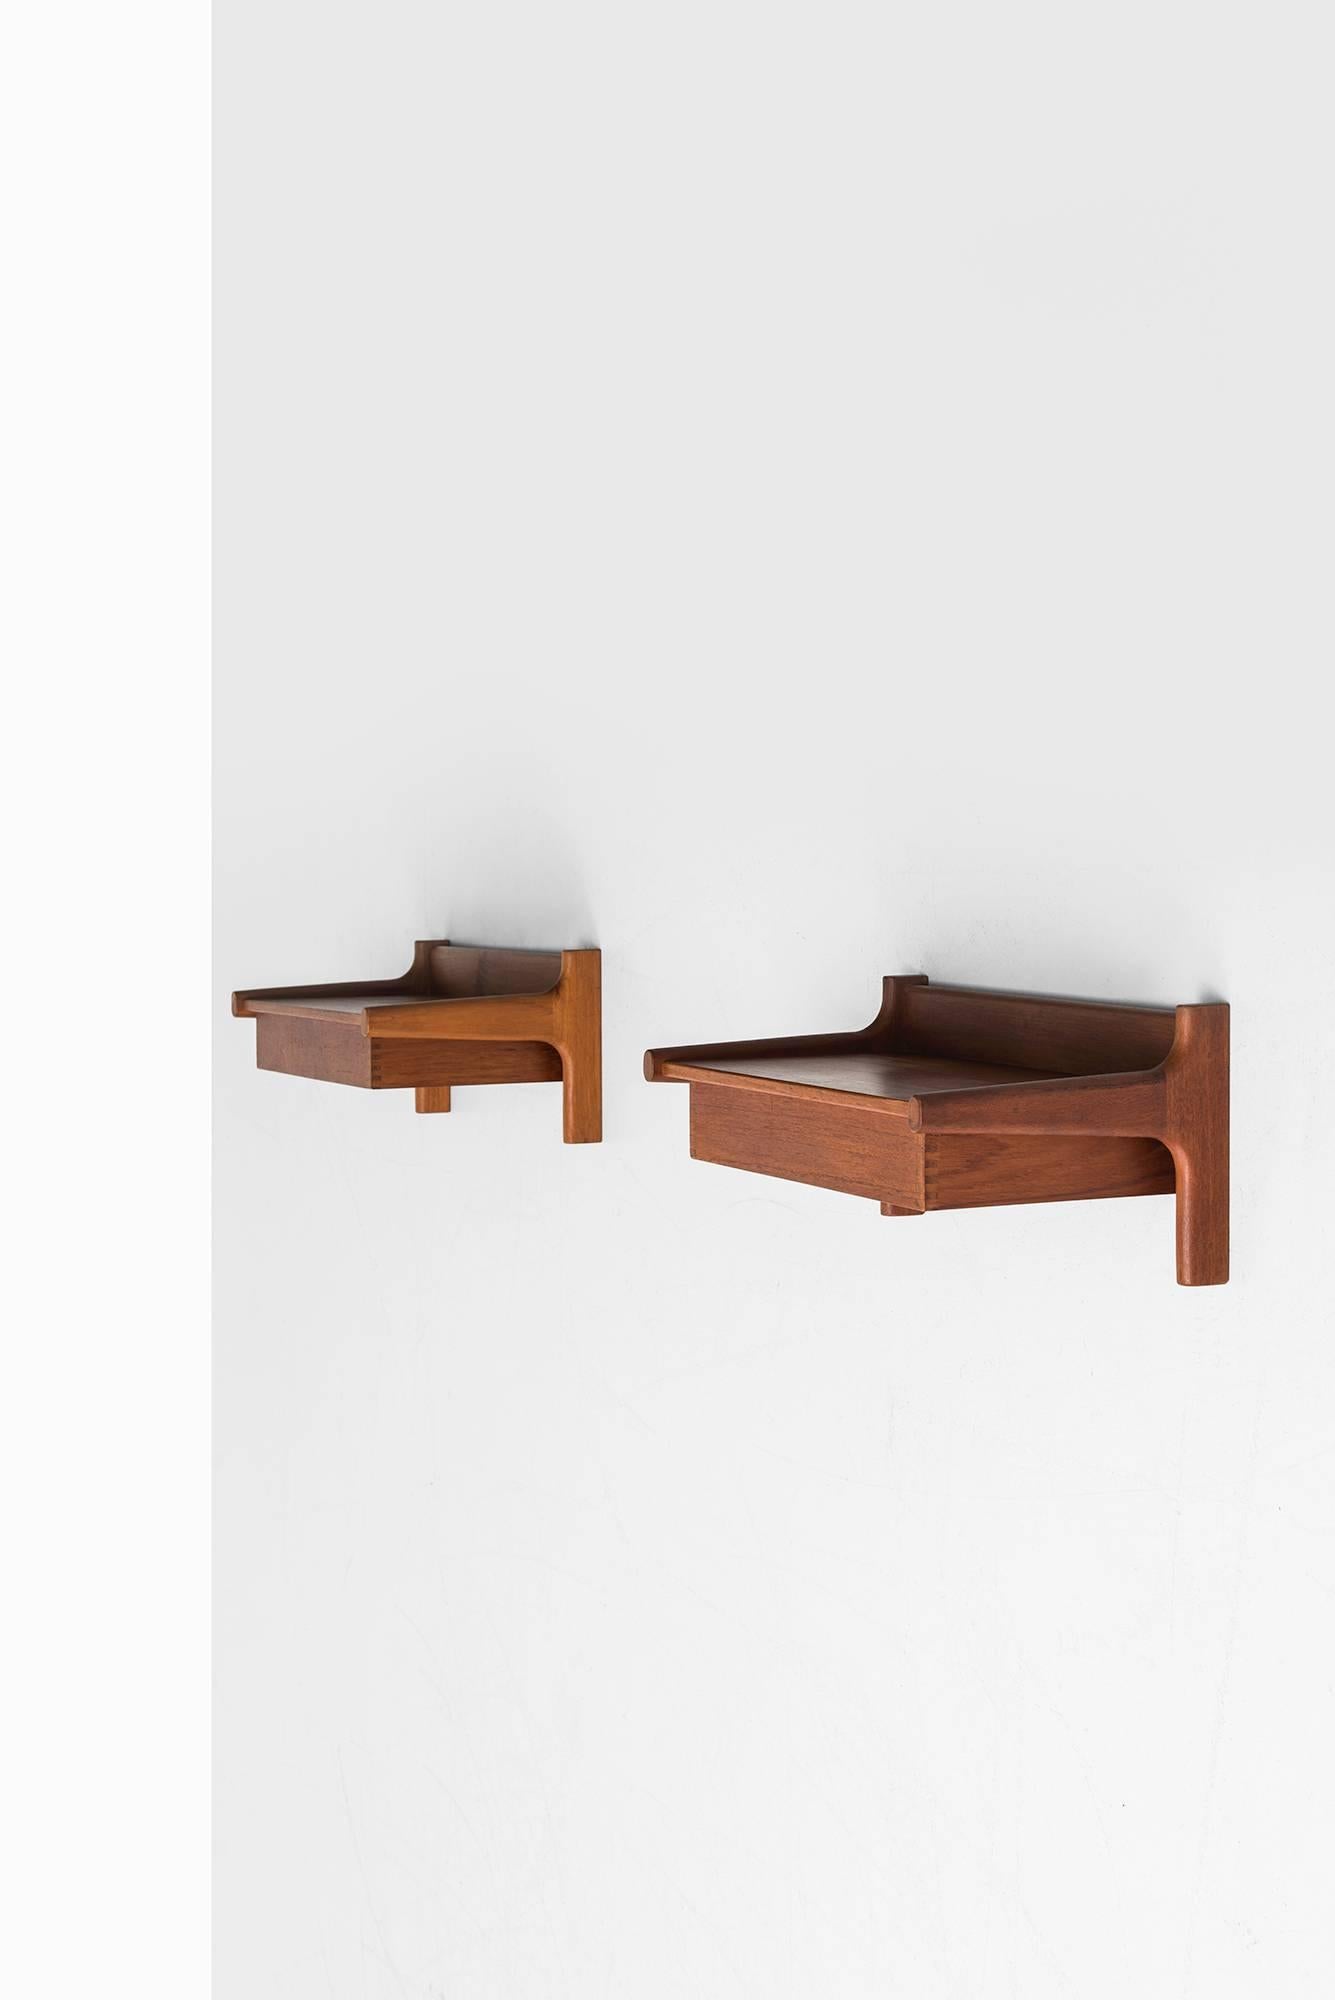 Rare pair of wall hanged bedside tables designed by Børge Mogensen. Produced by Søborg Møbelfabrik in Denmark.